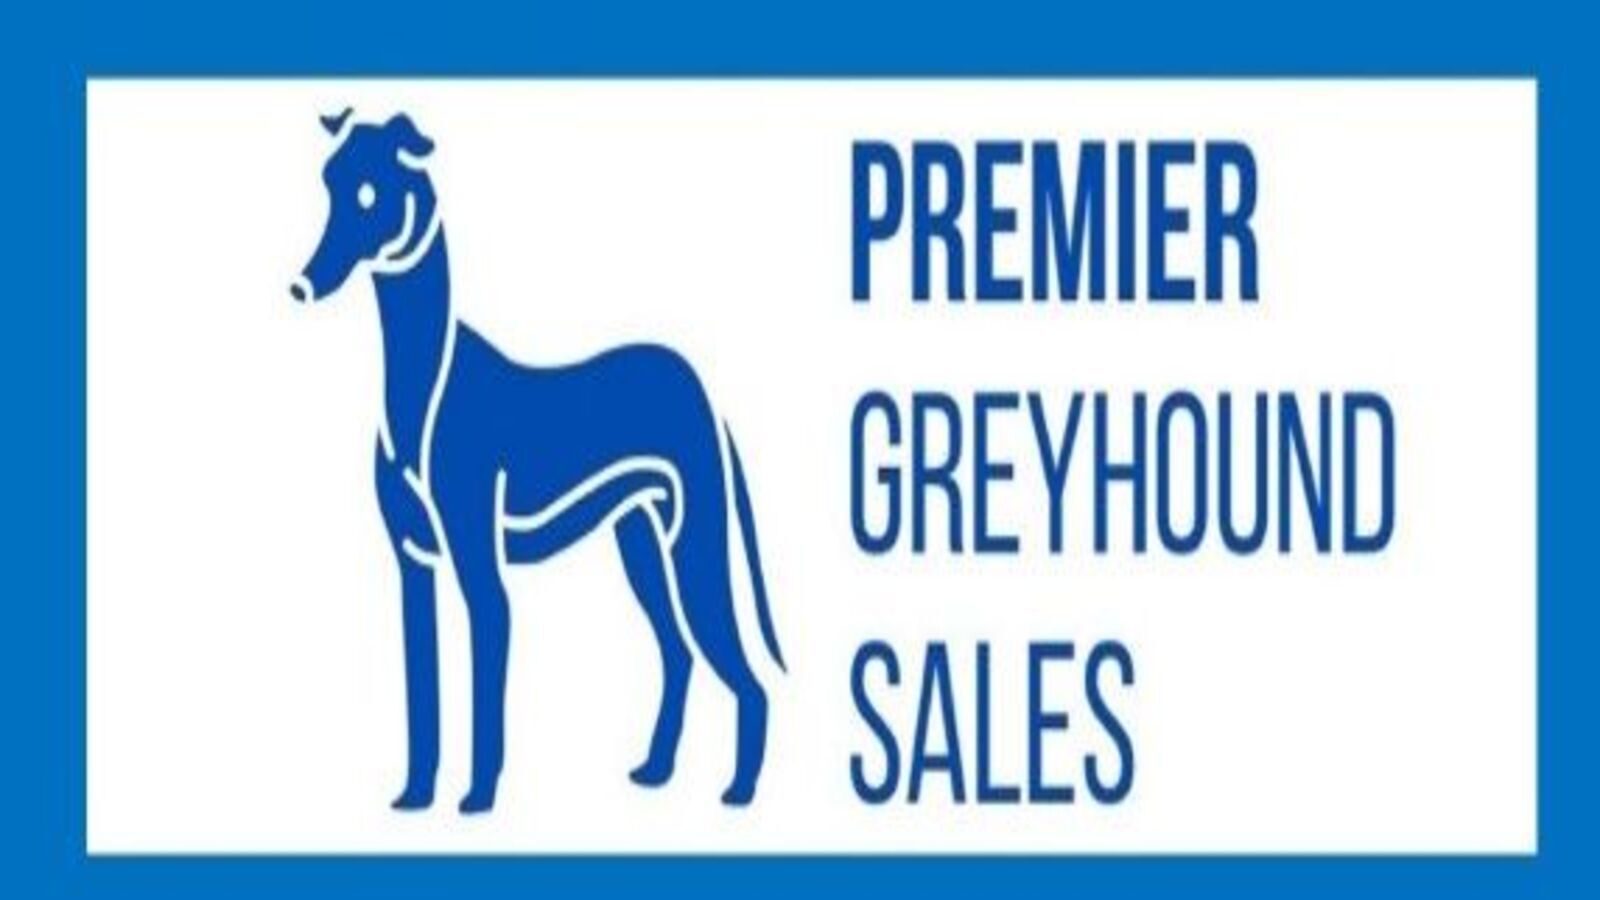 Premier Greyhound Sales – Sheffield Preview